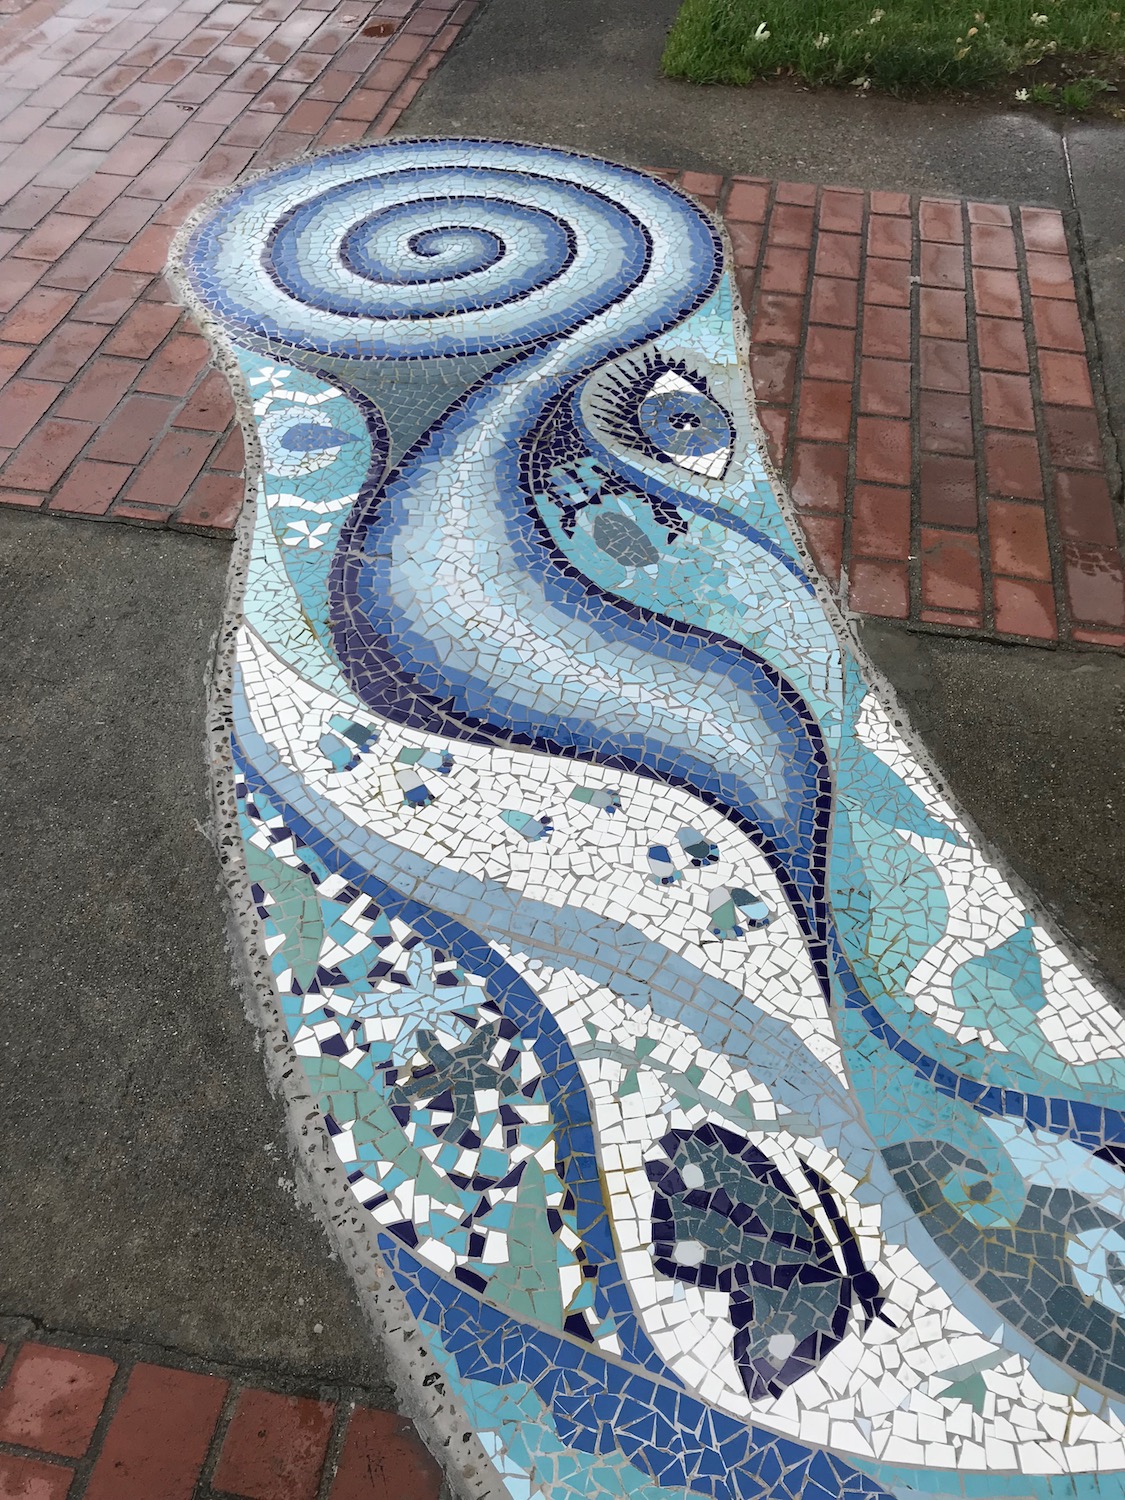 09-gabrielle-strong-public-art-mosaic-river-vernon-spiral-4.jpg